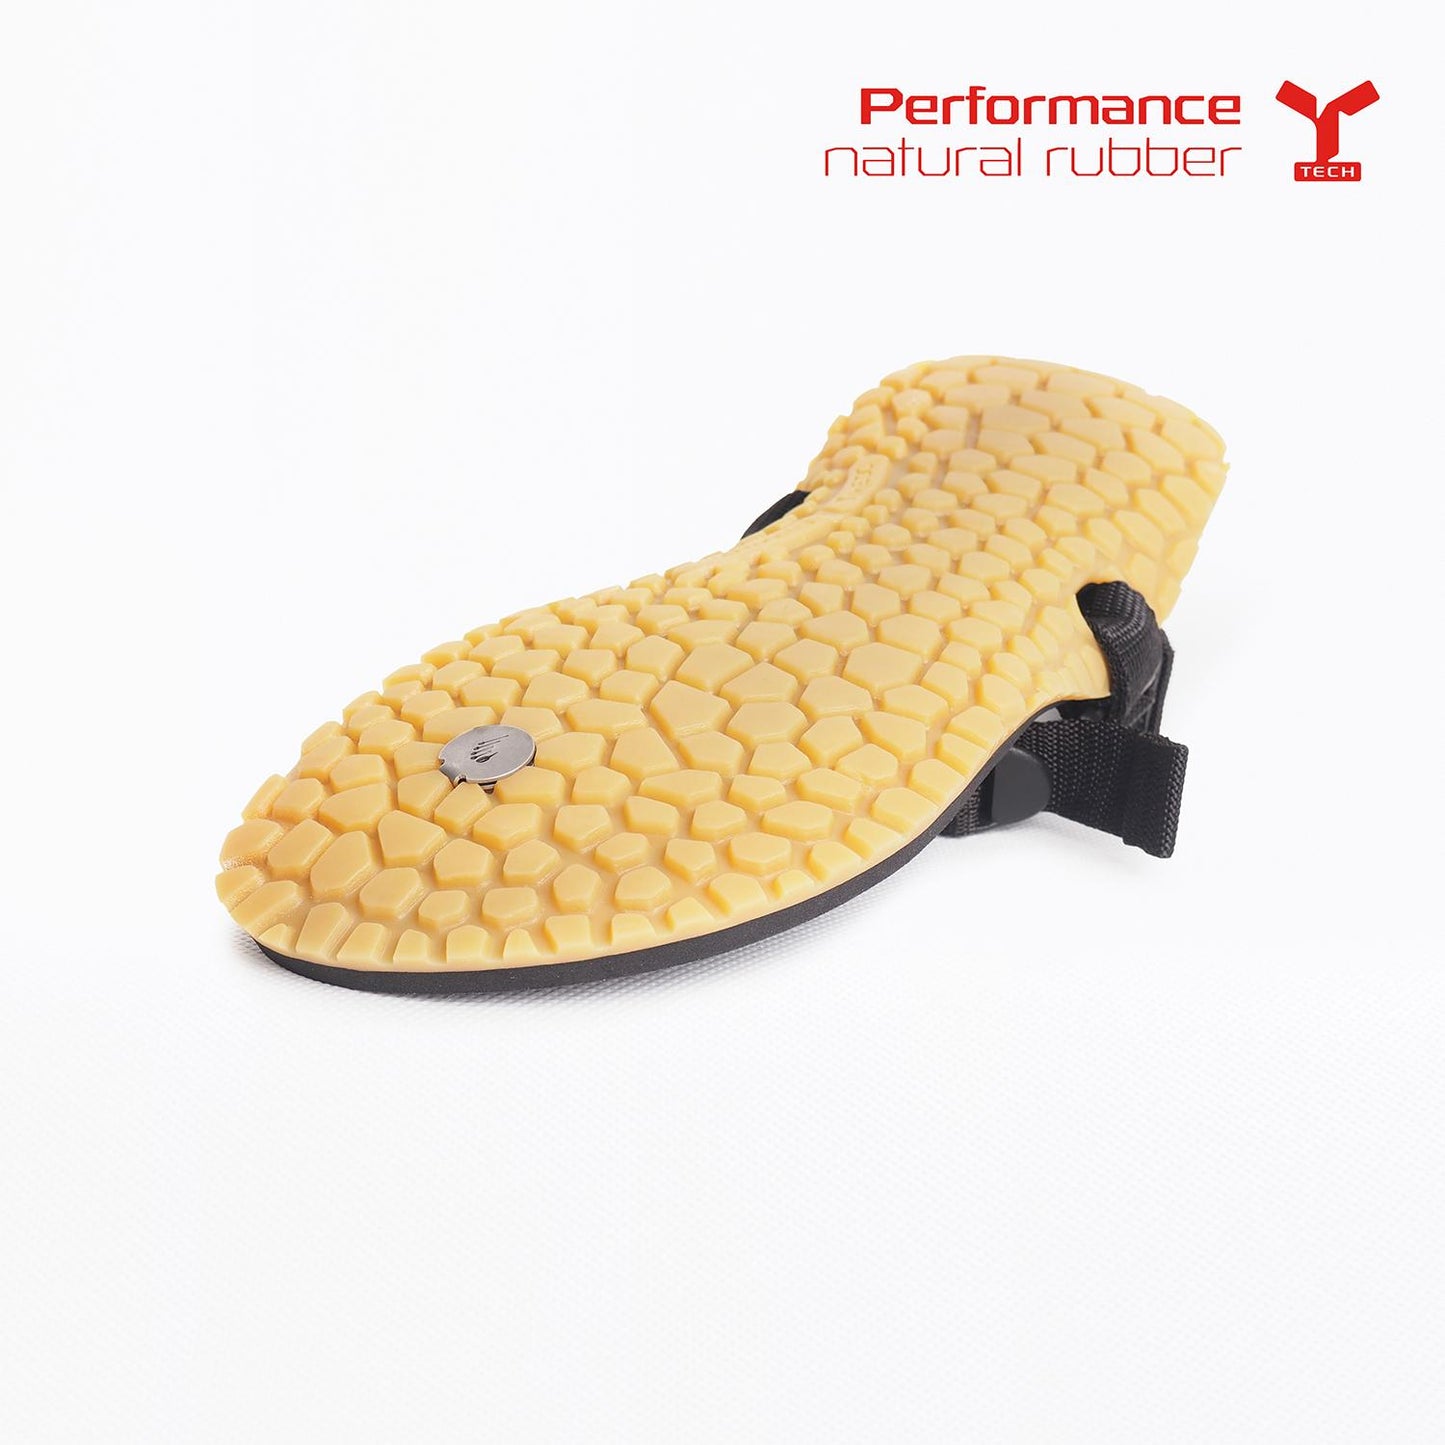 Bosky Performance Natural Rubber Sandal